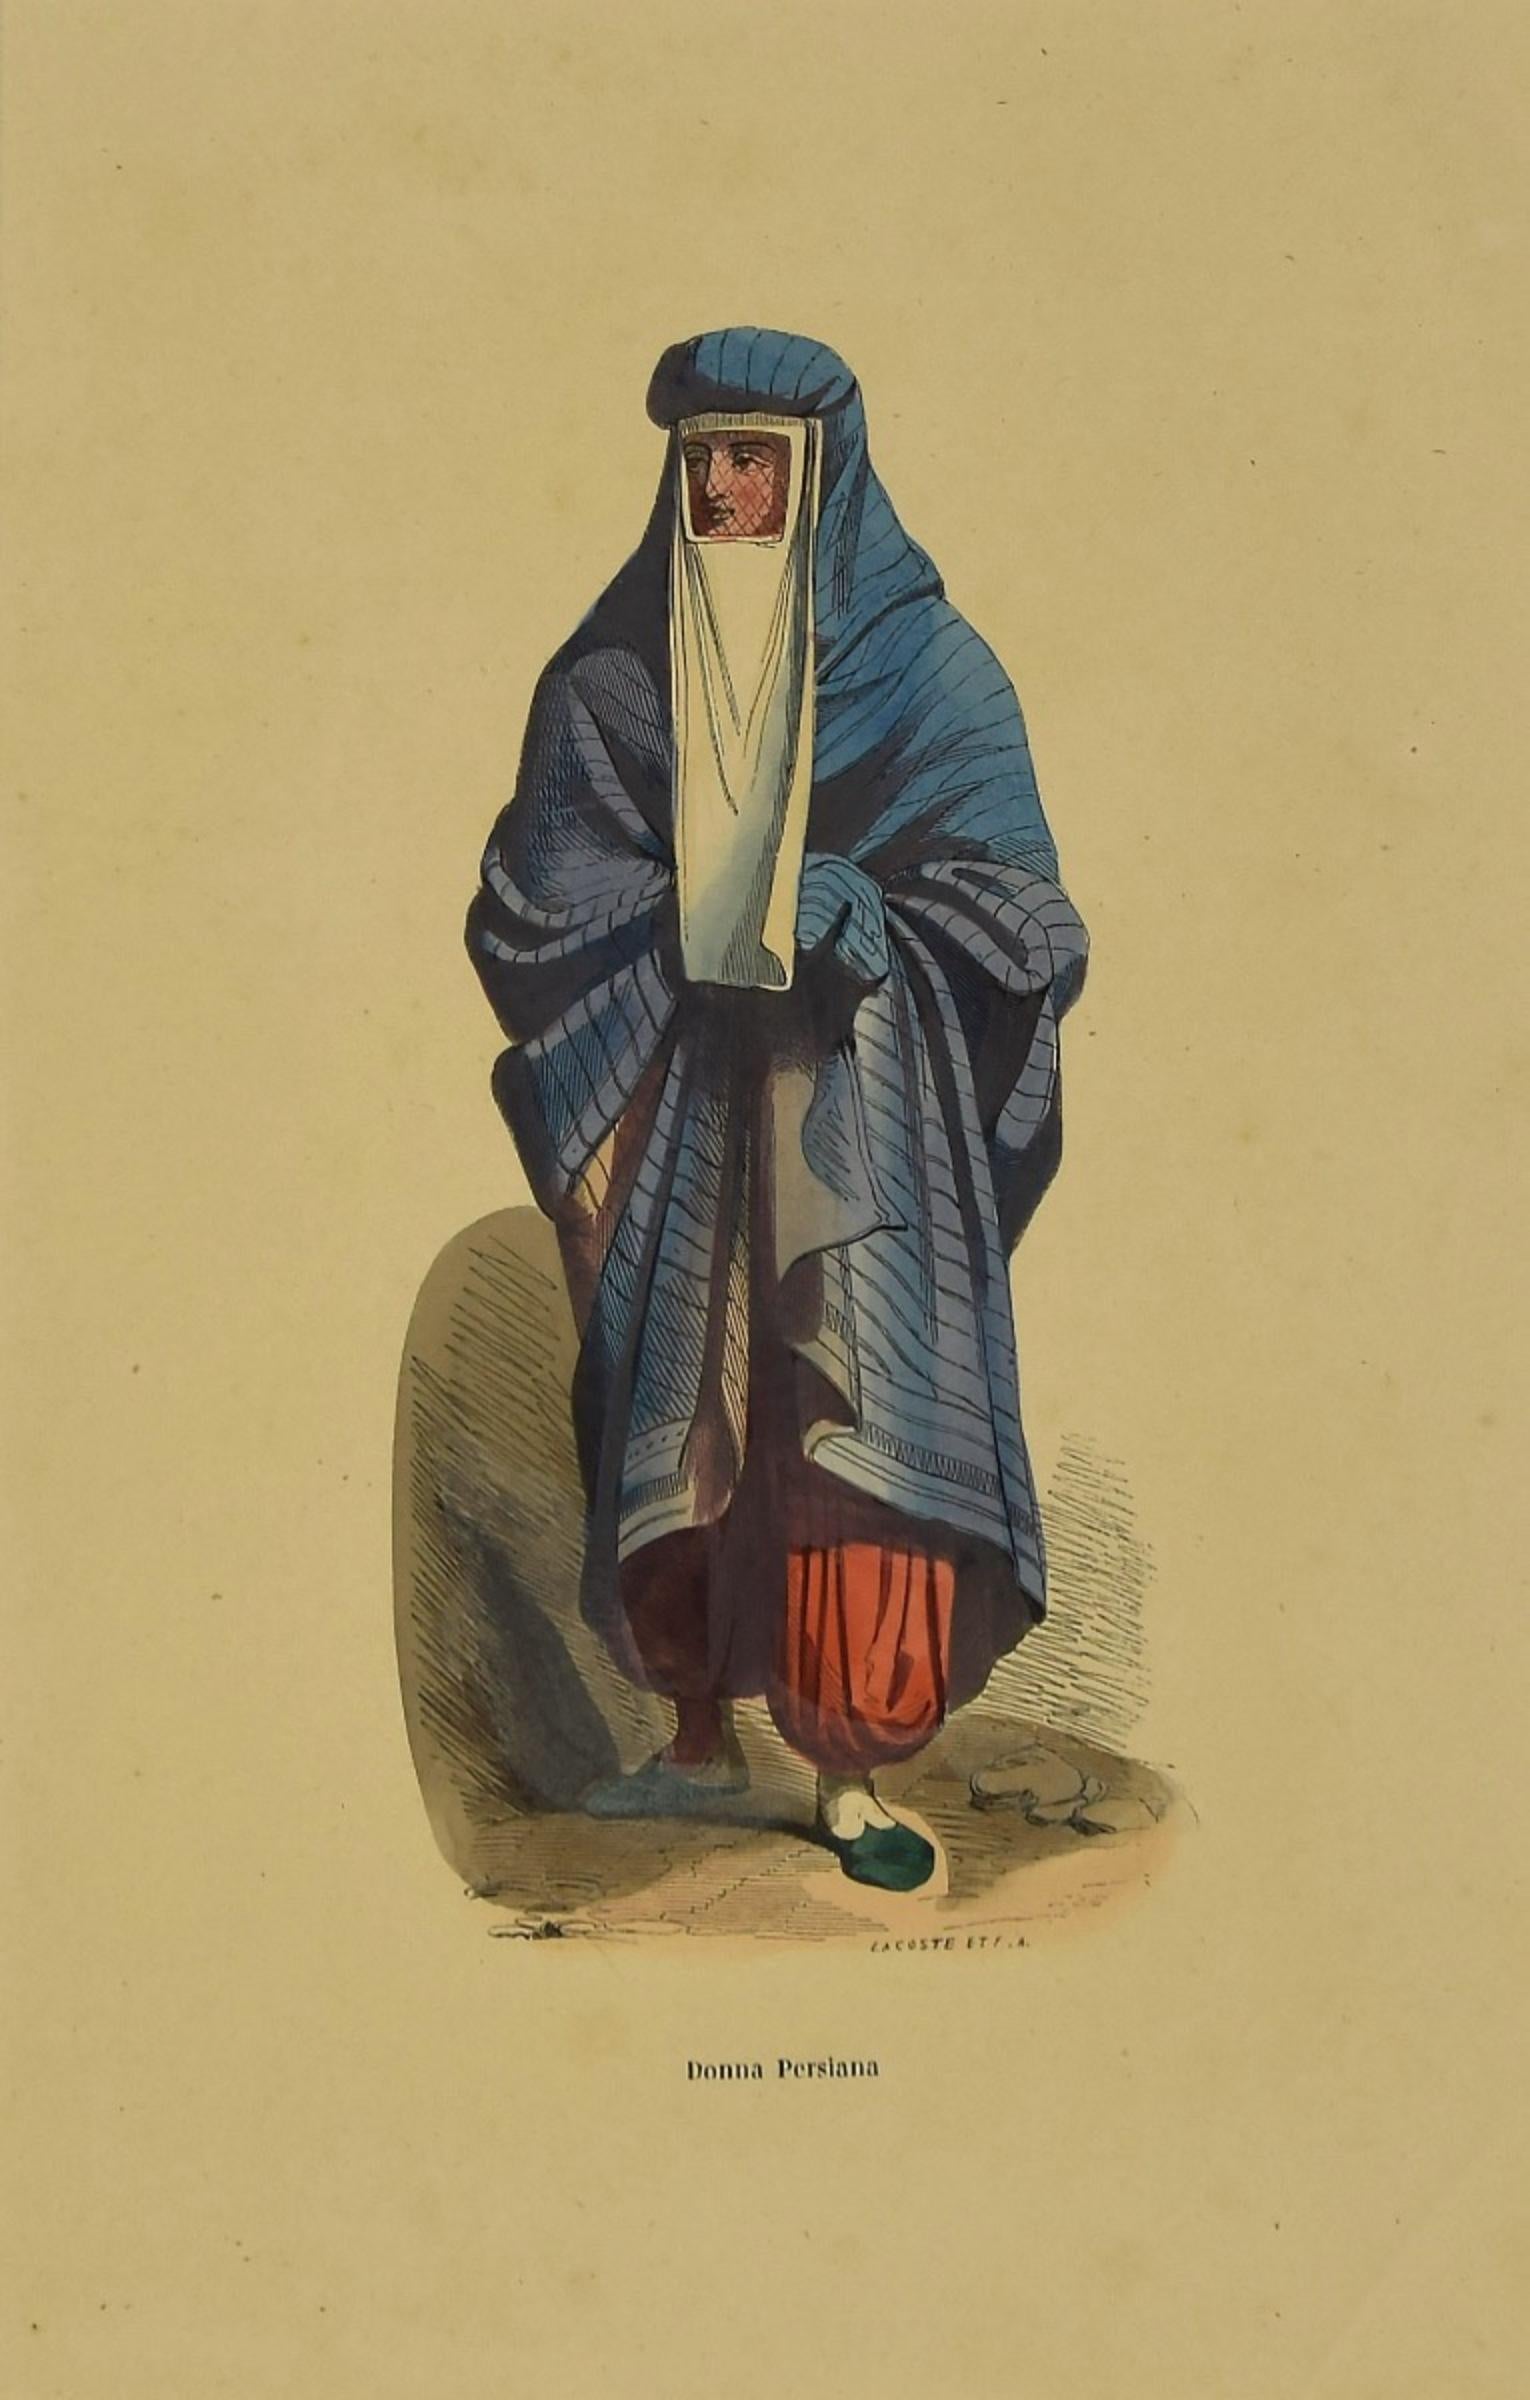 Unknown Portrait Print - Persian Woman - Original Lithograph - 1851 ca